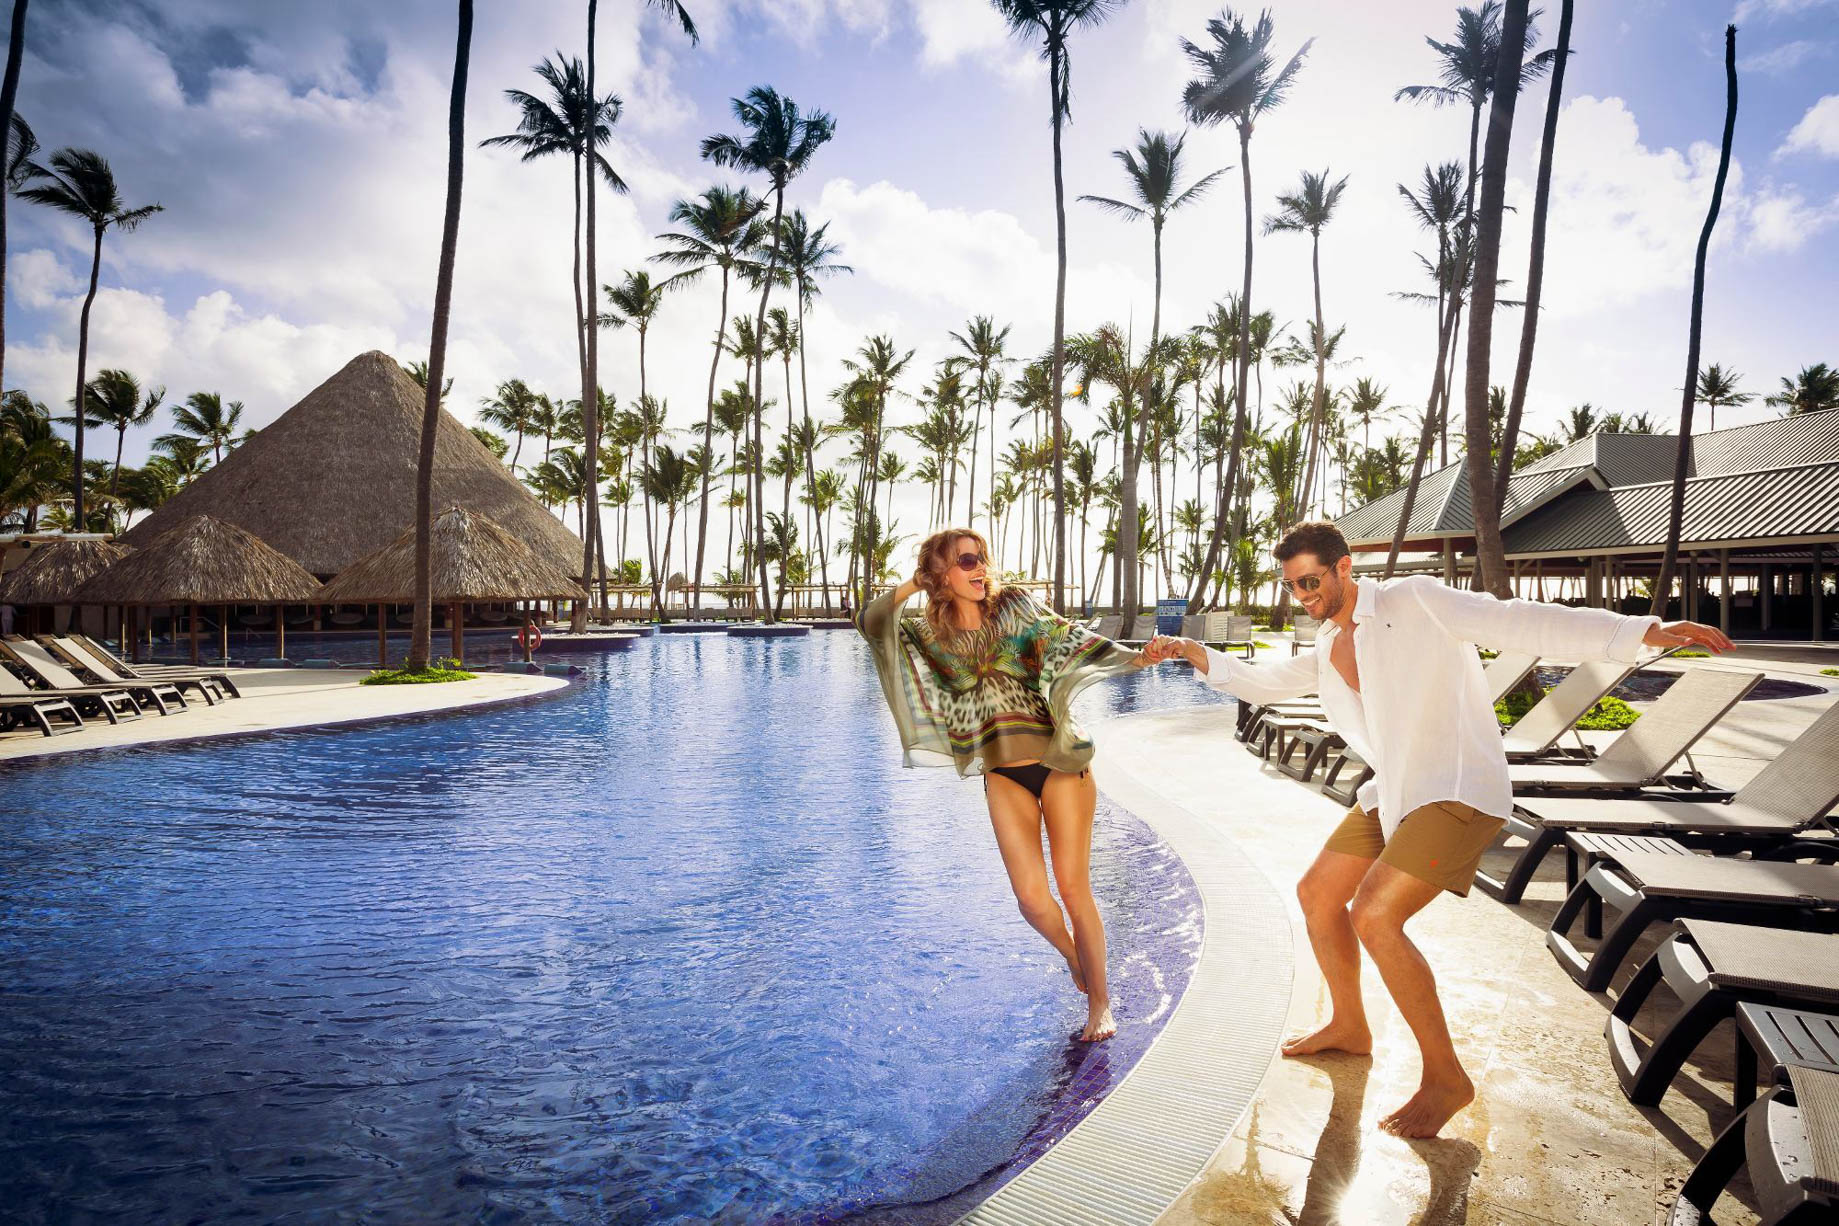 Barceló Bávaro Beach Hotel Grand Resort – Punta Cana, Dominican Republic – Pool